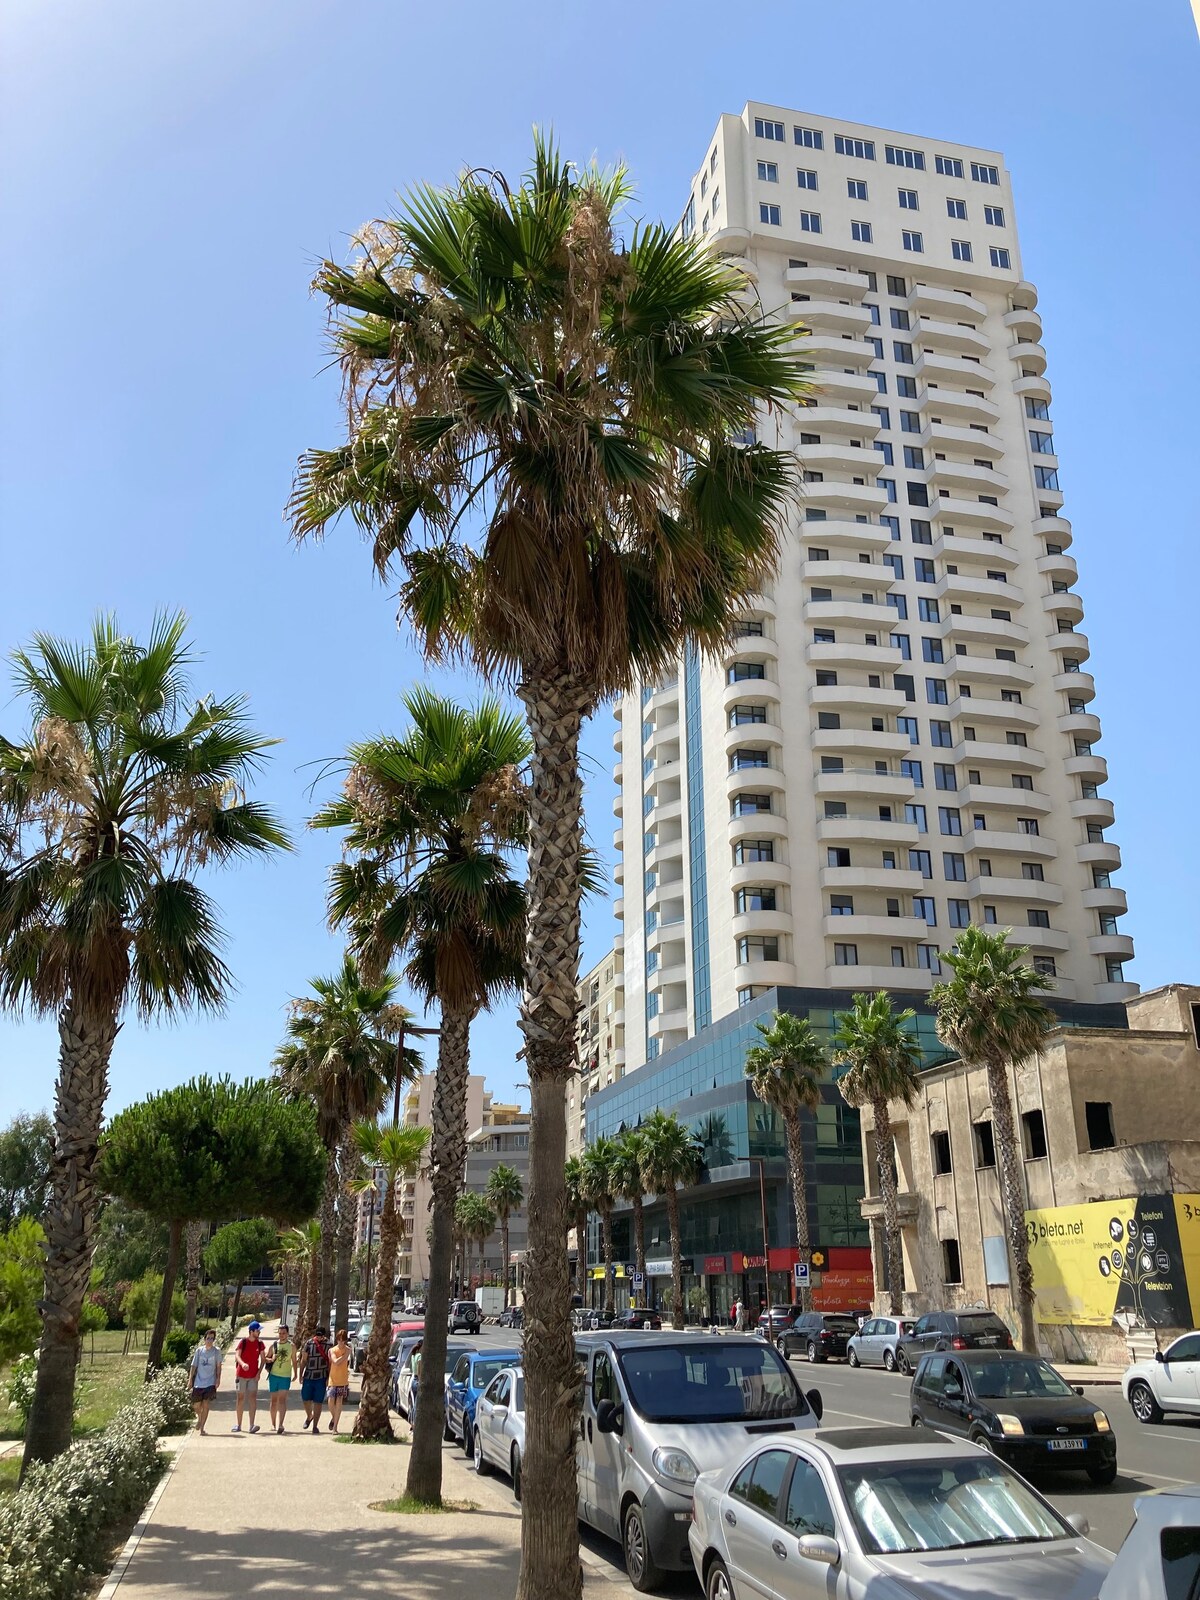 Durrës Top Floor Panorama